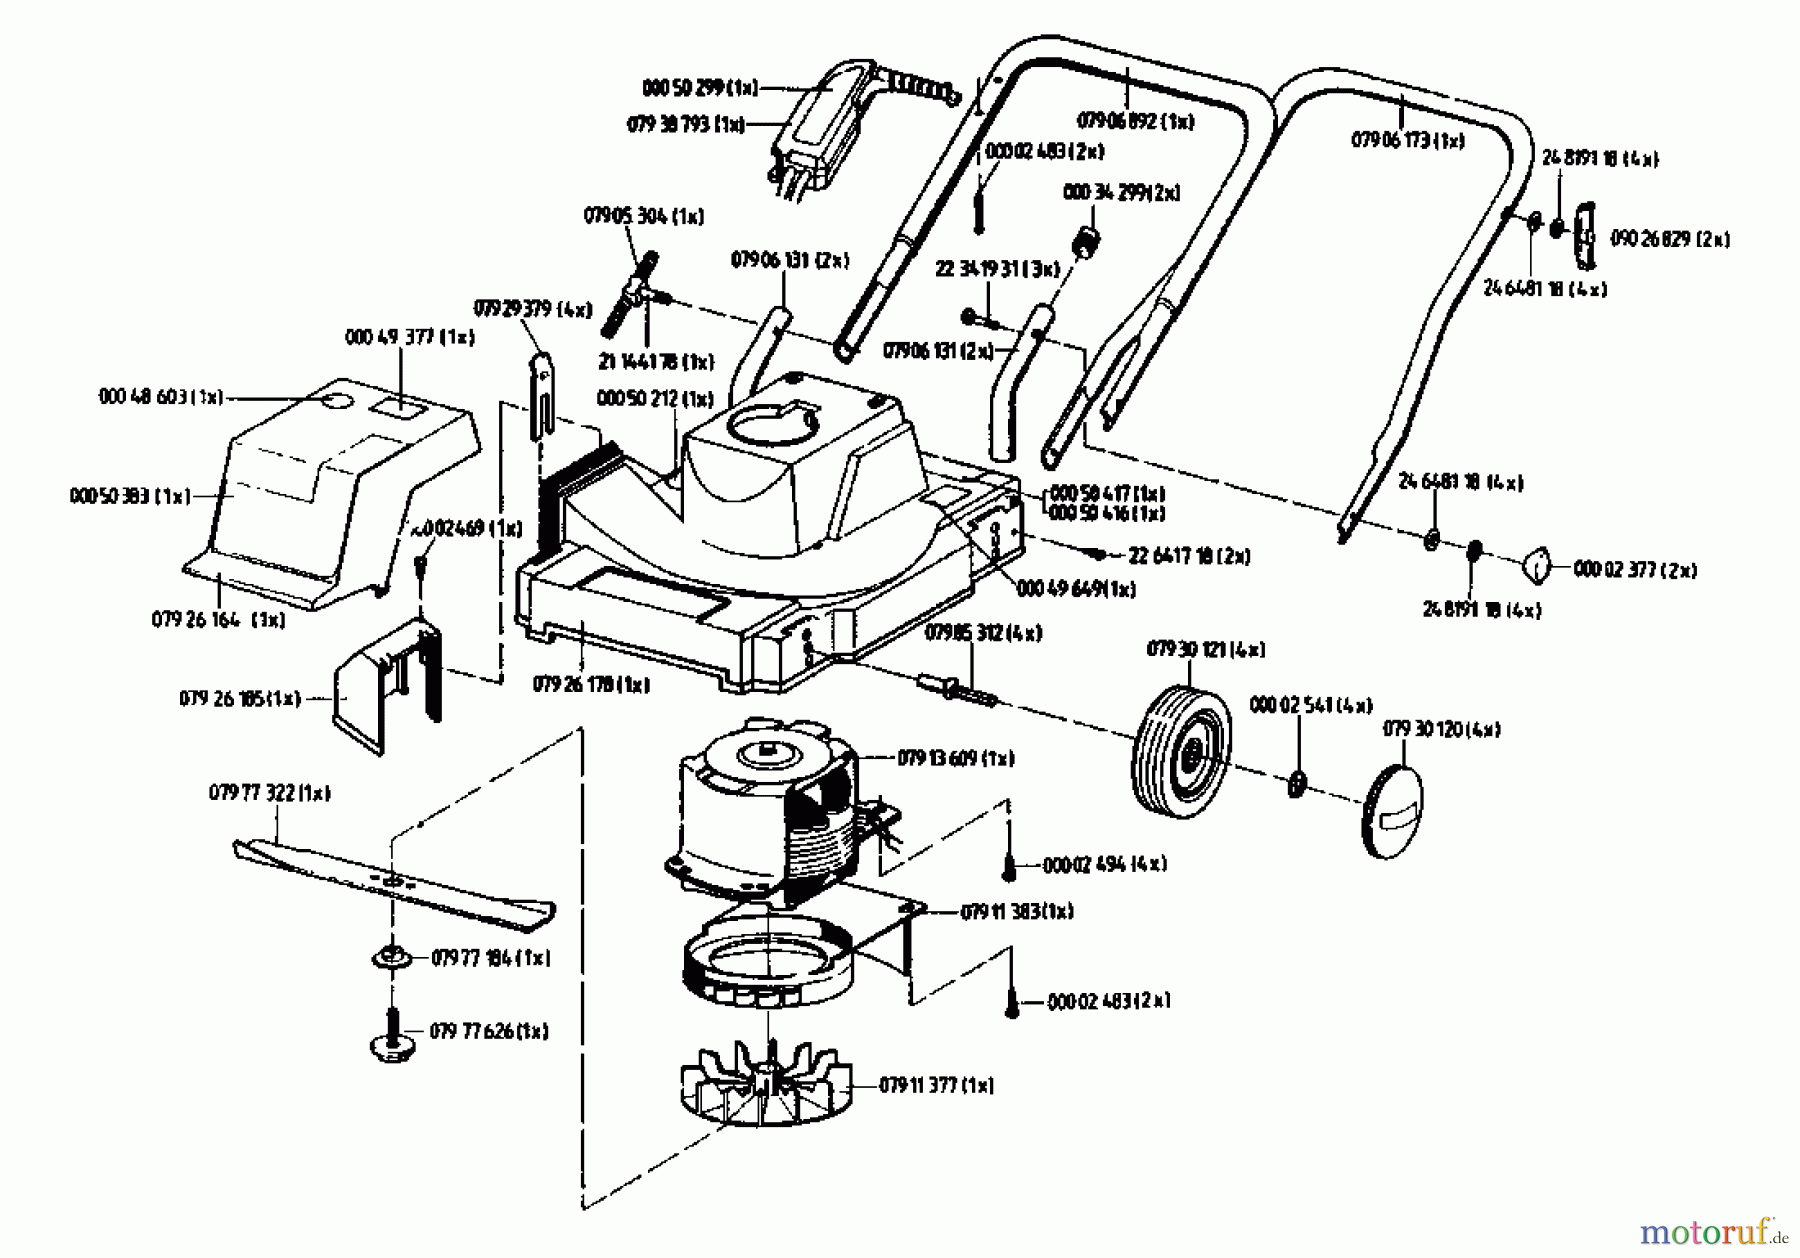  Golf Electric mower 130 SE 02804.01  (1993) Basic machine